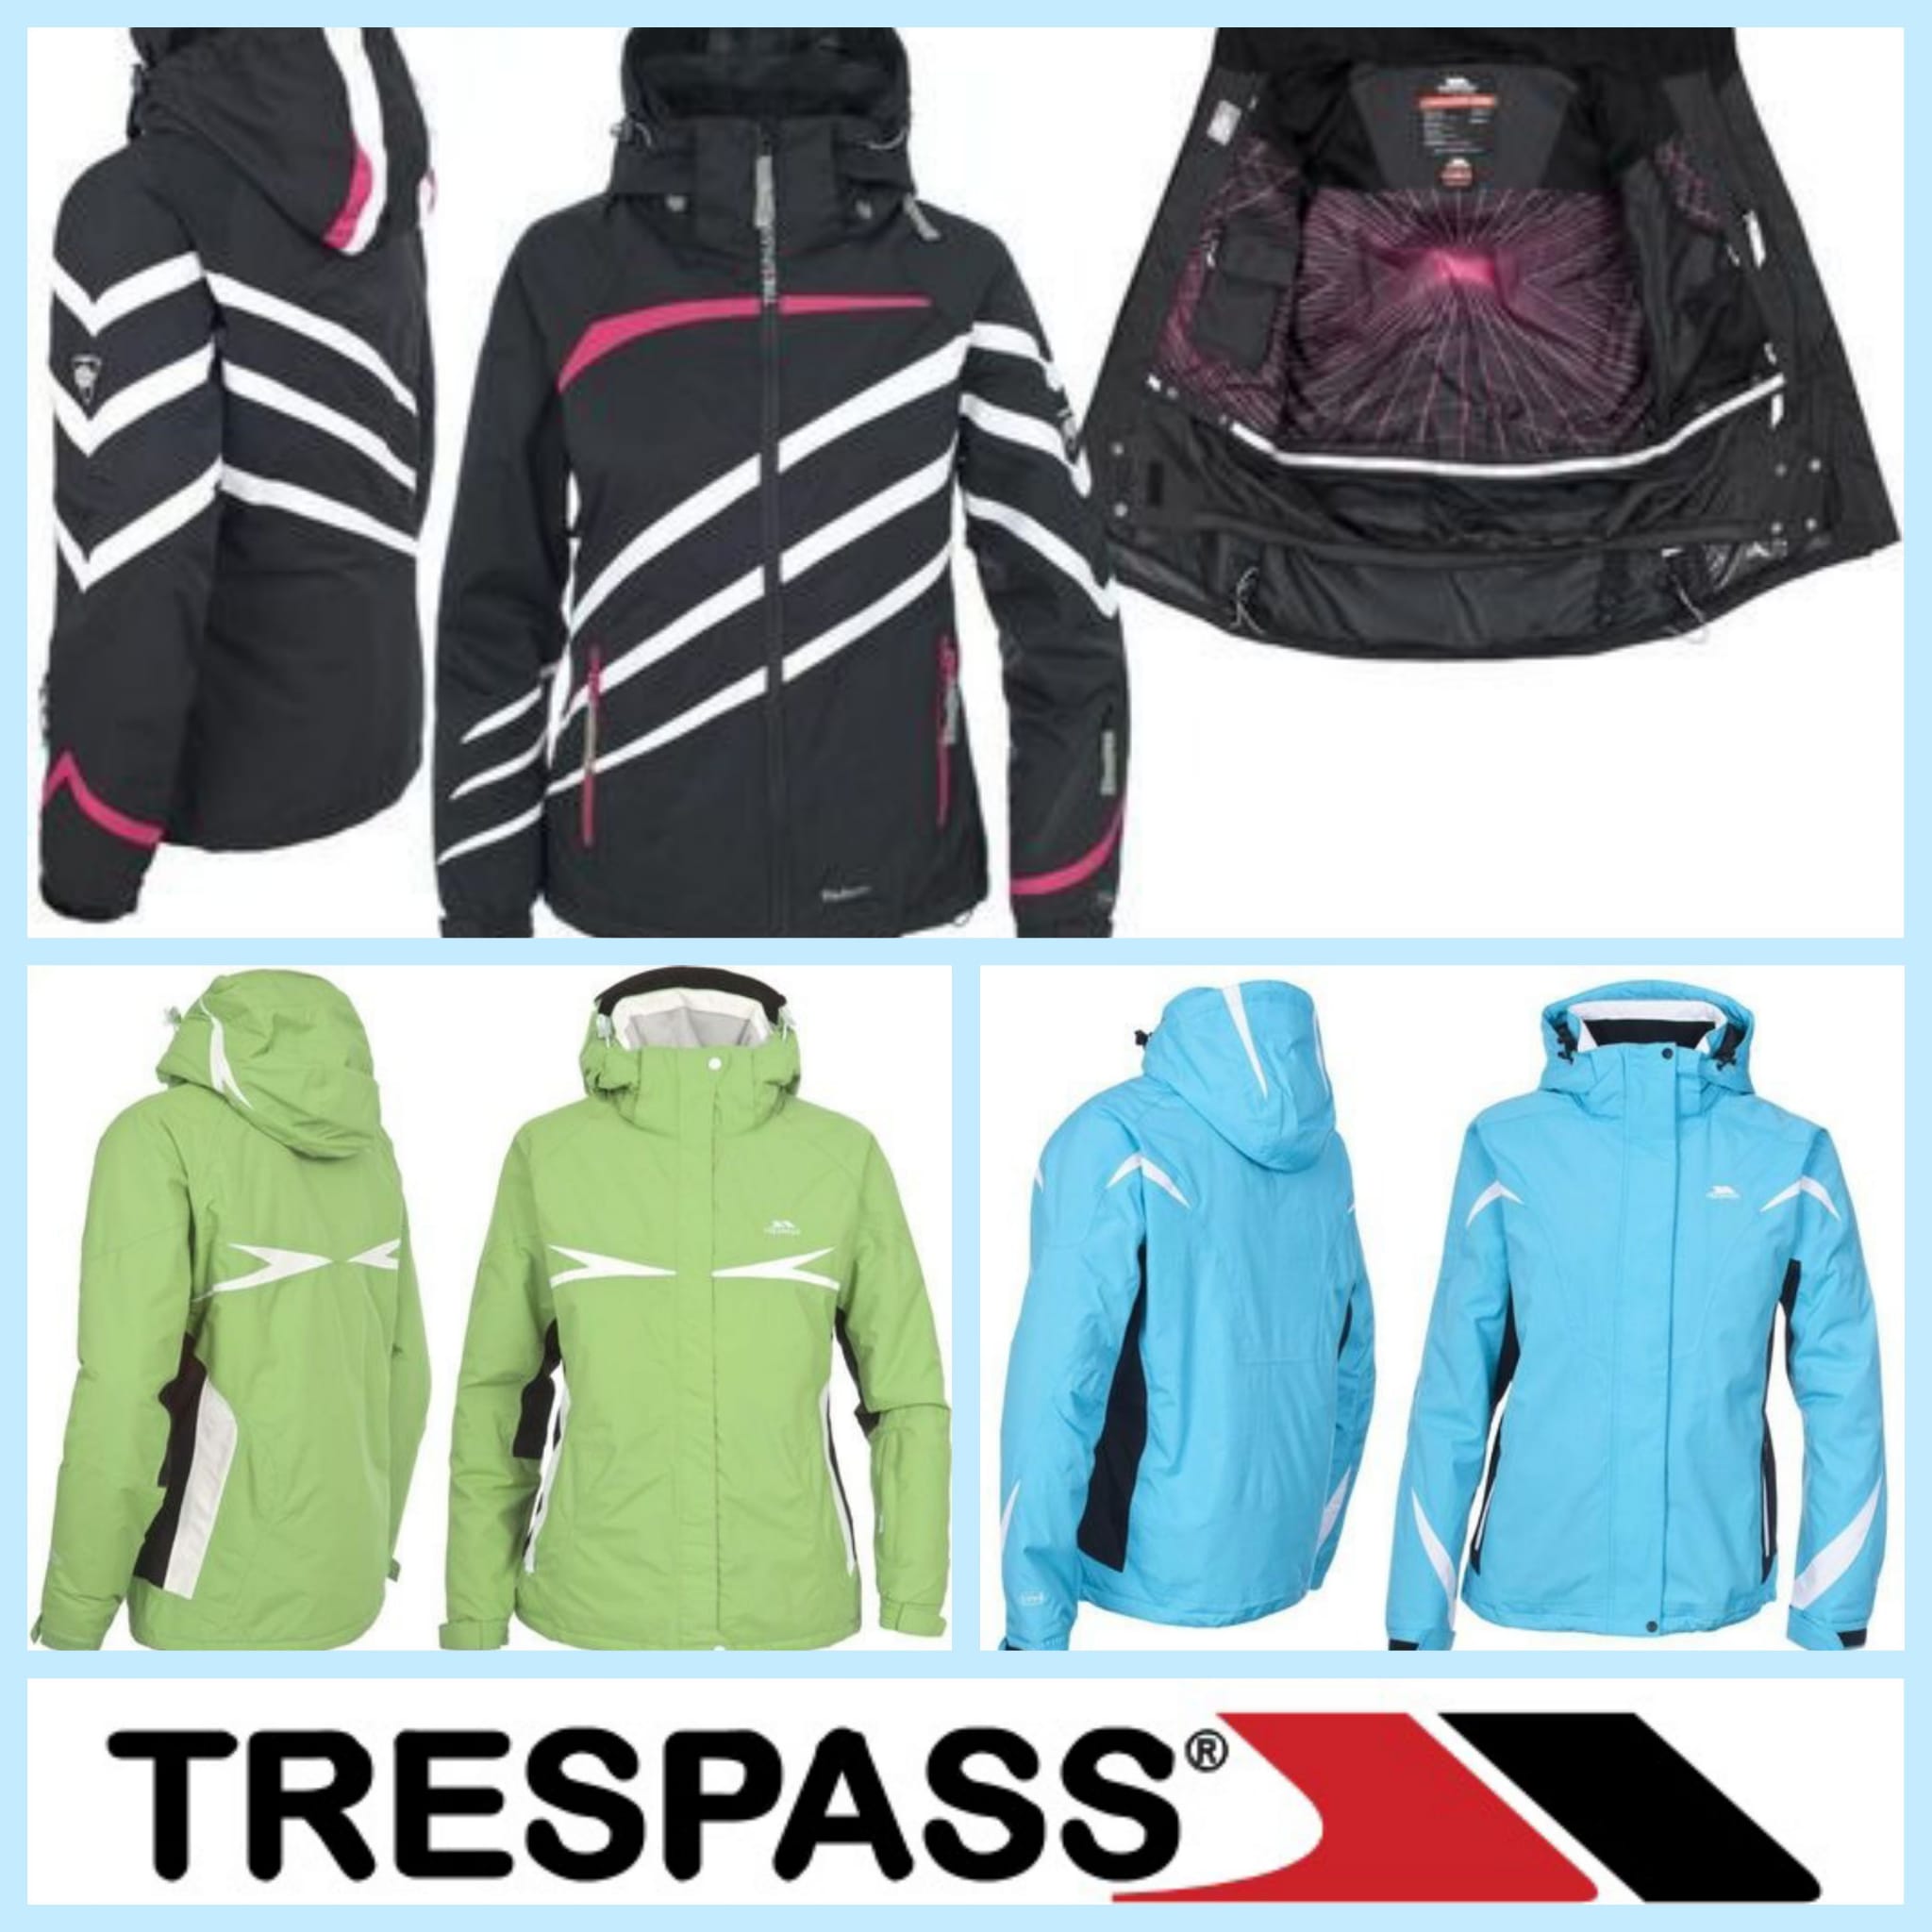  Trespass Women's Ski Jackets